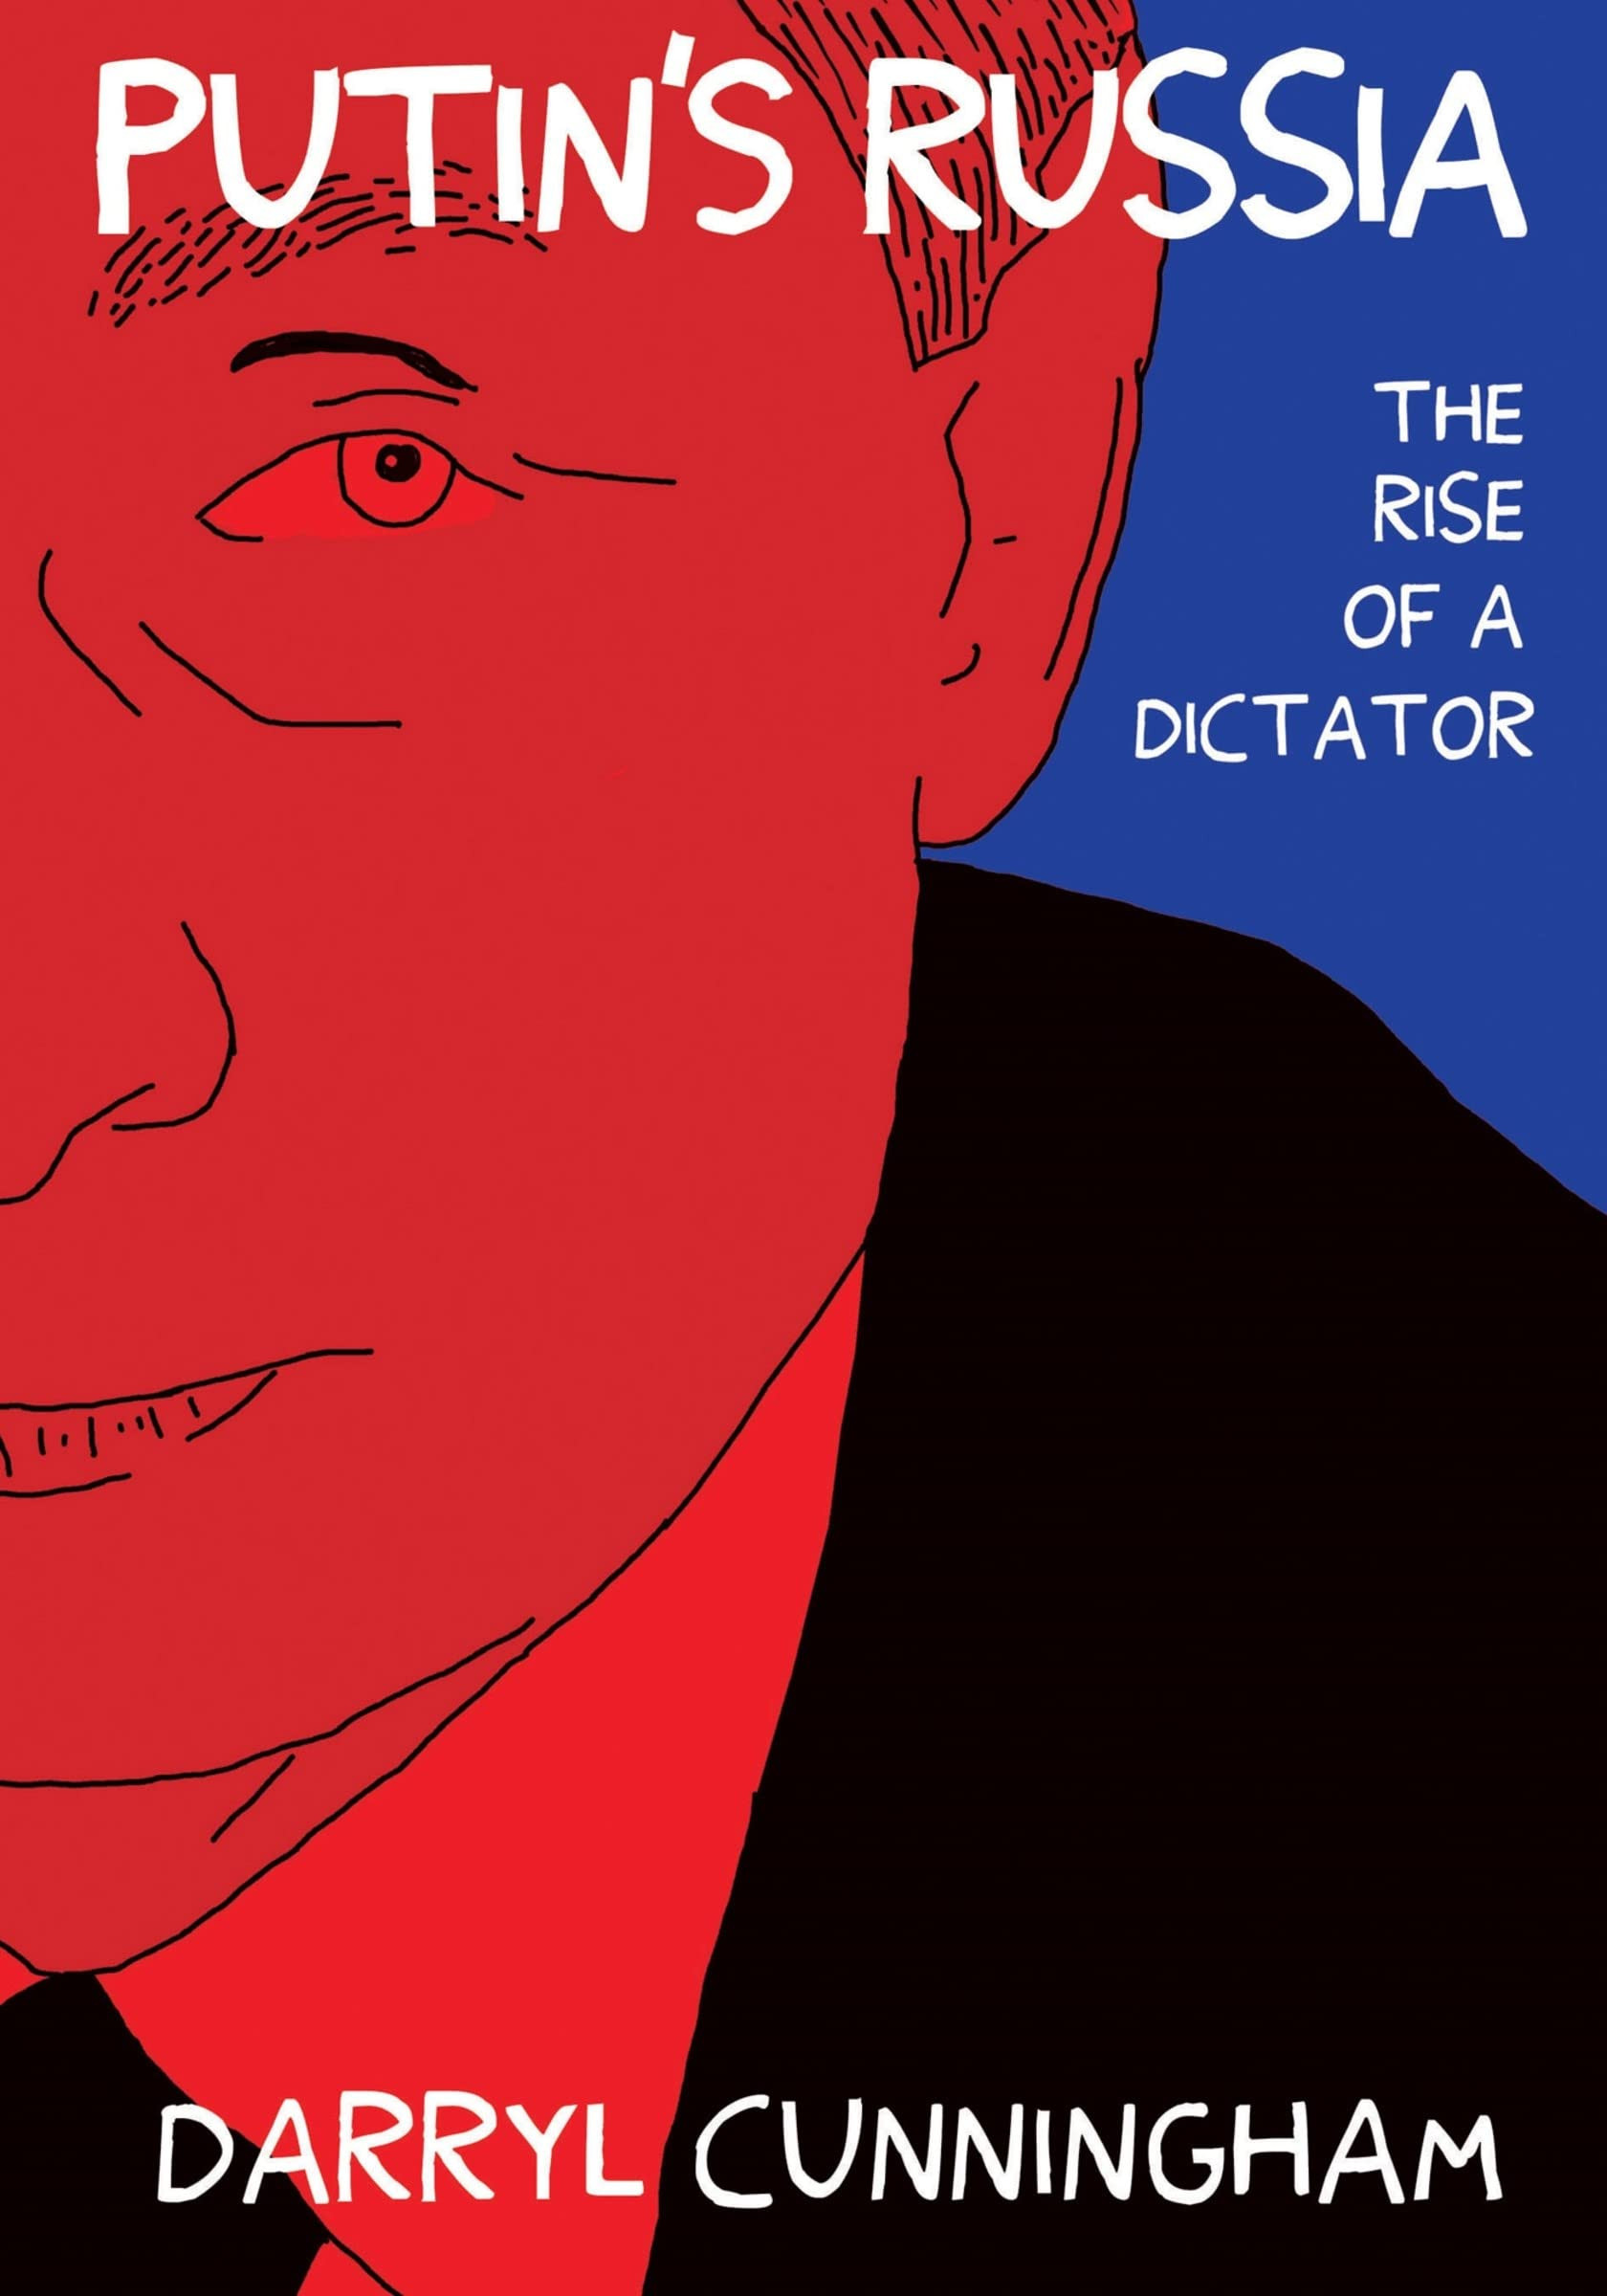 Putin's Russia - The Rise of a Dictator